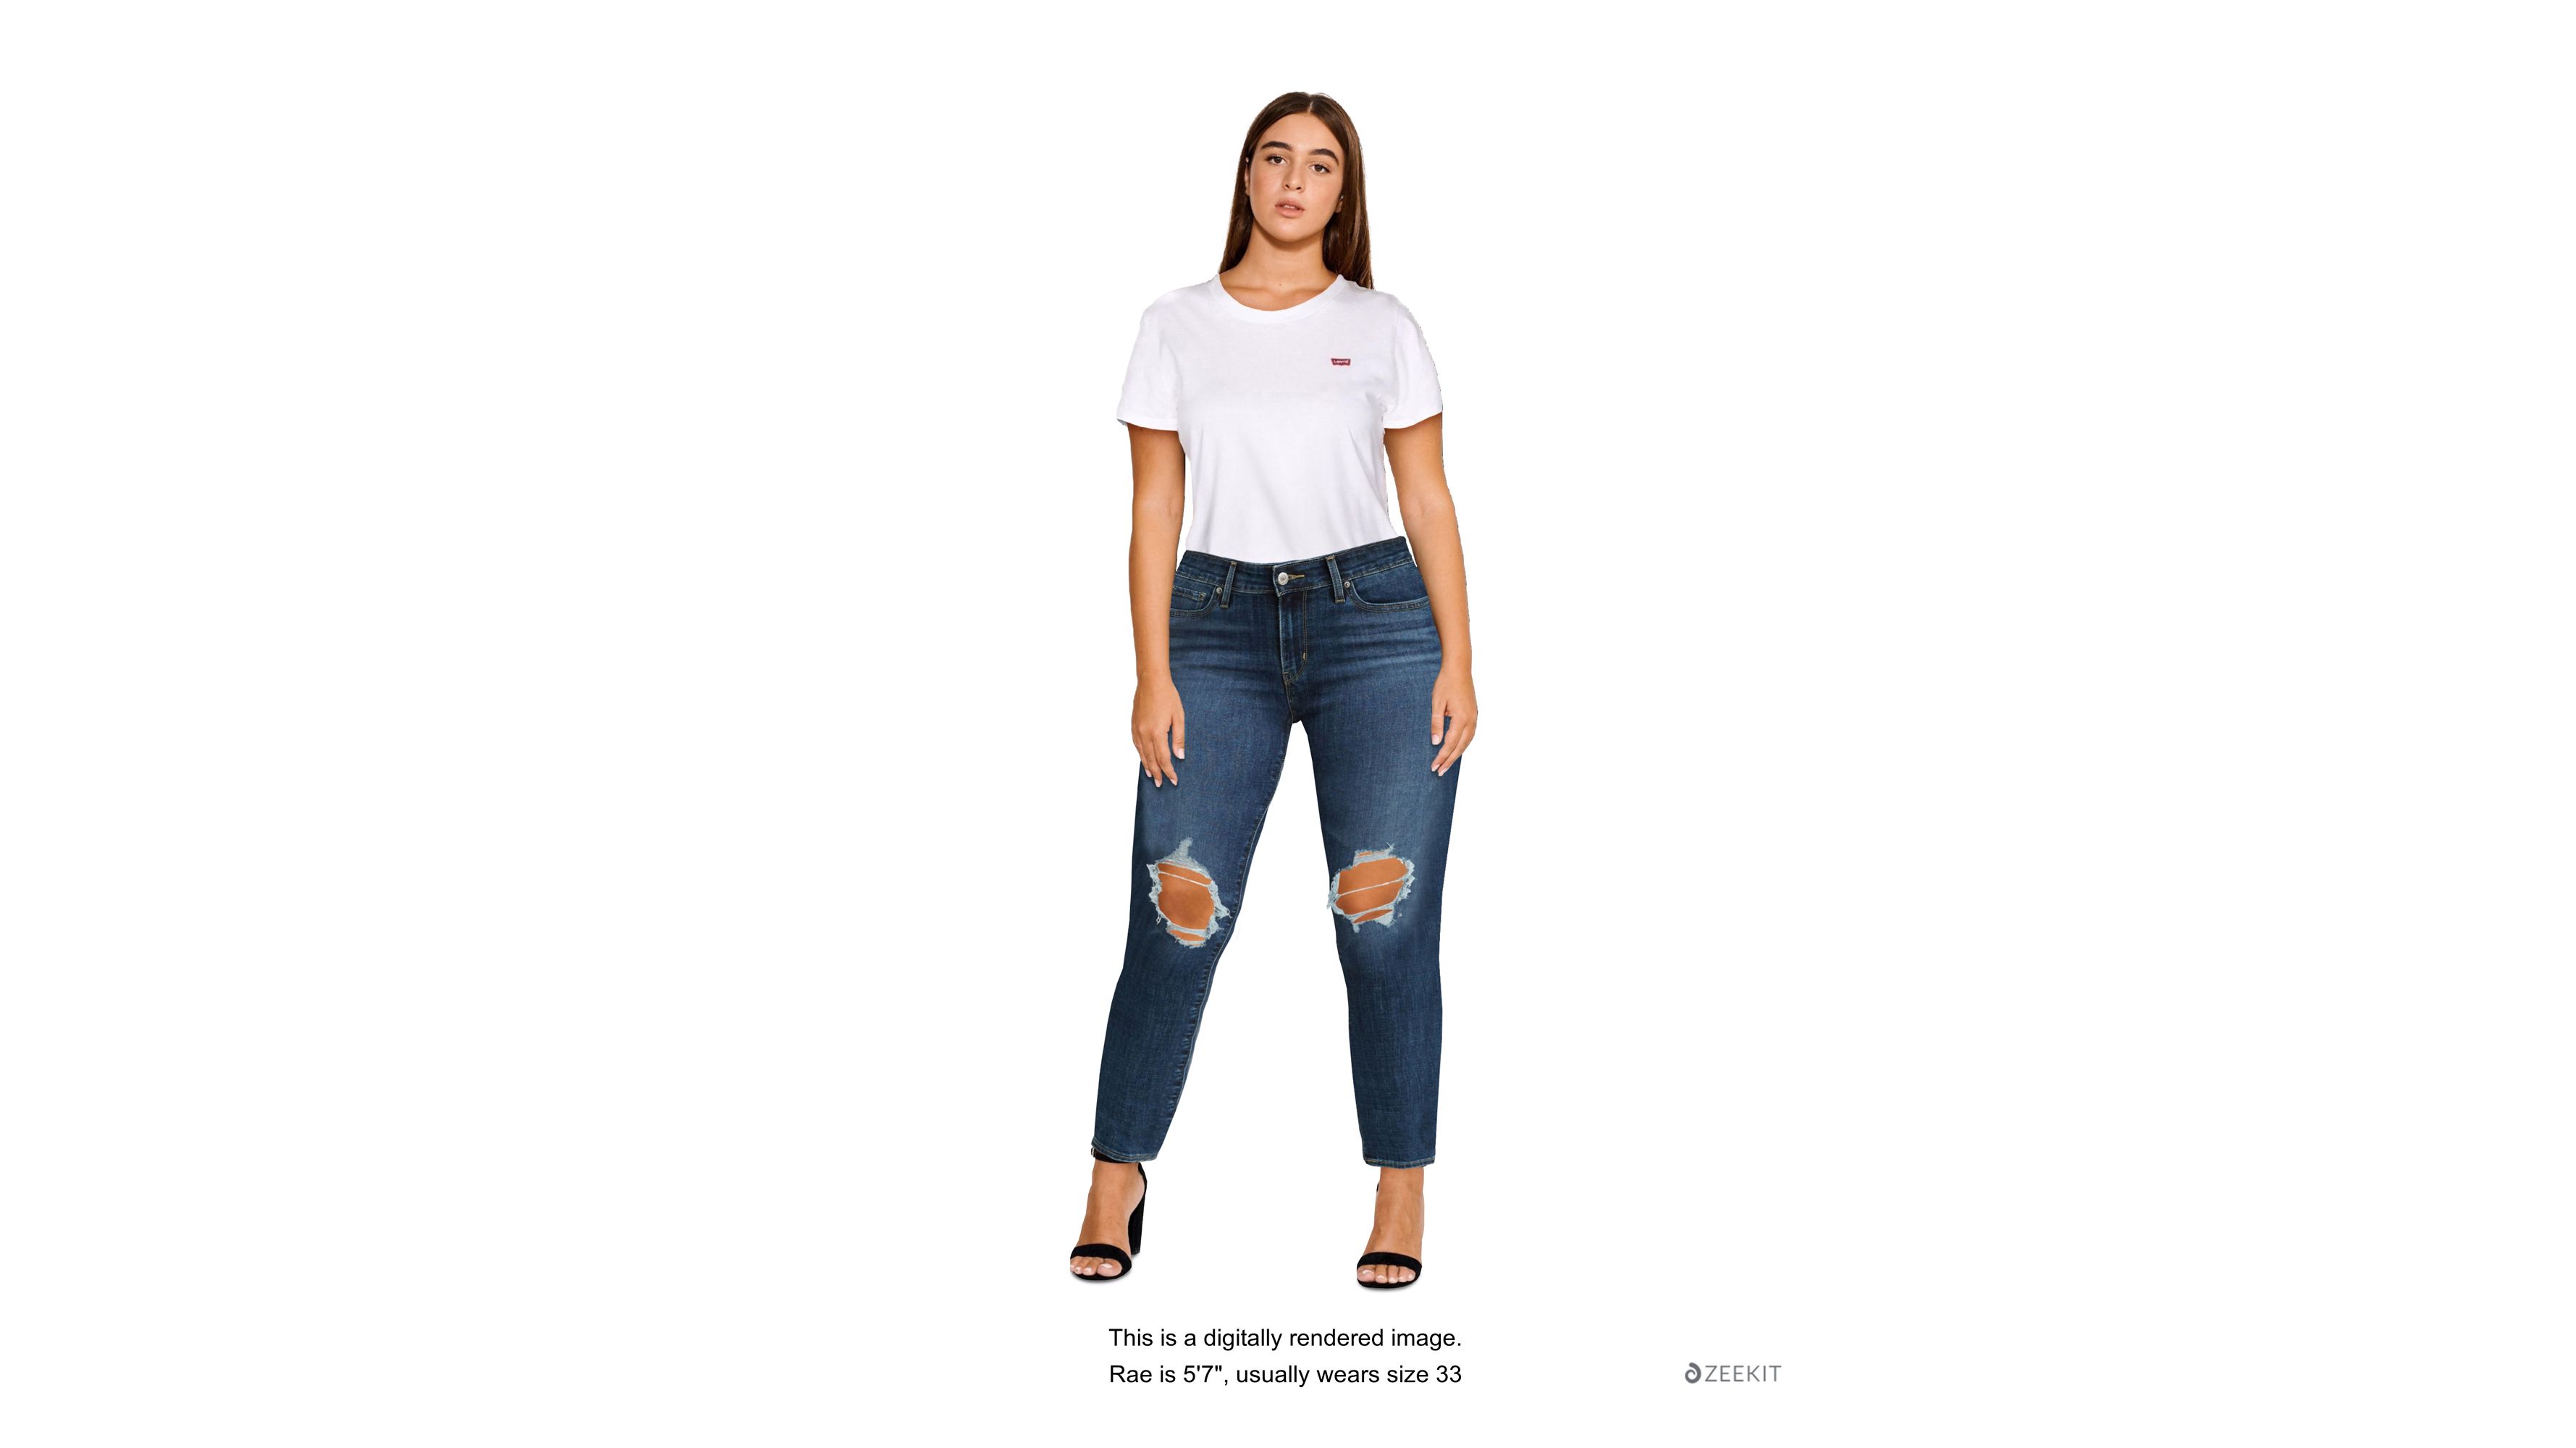 levi's 711 jeans review